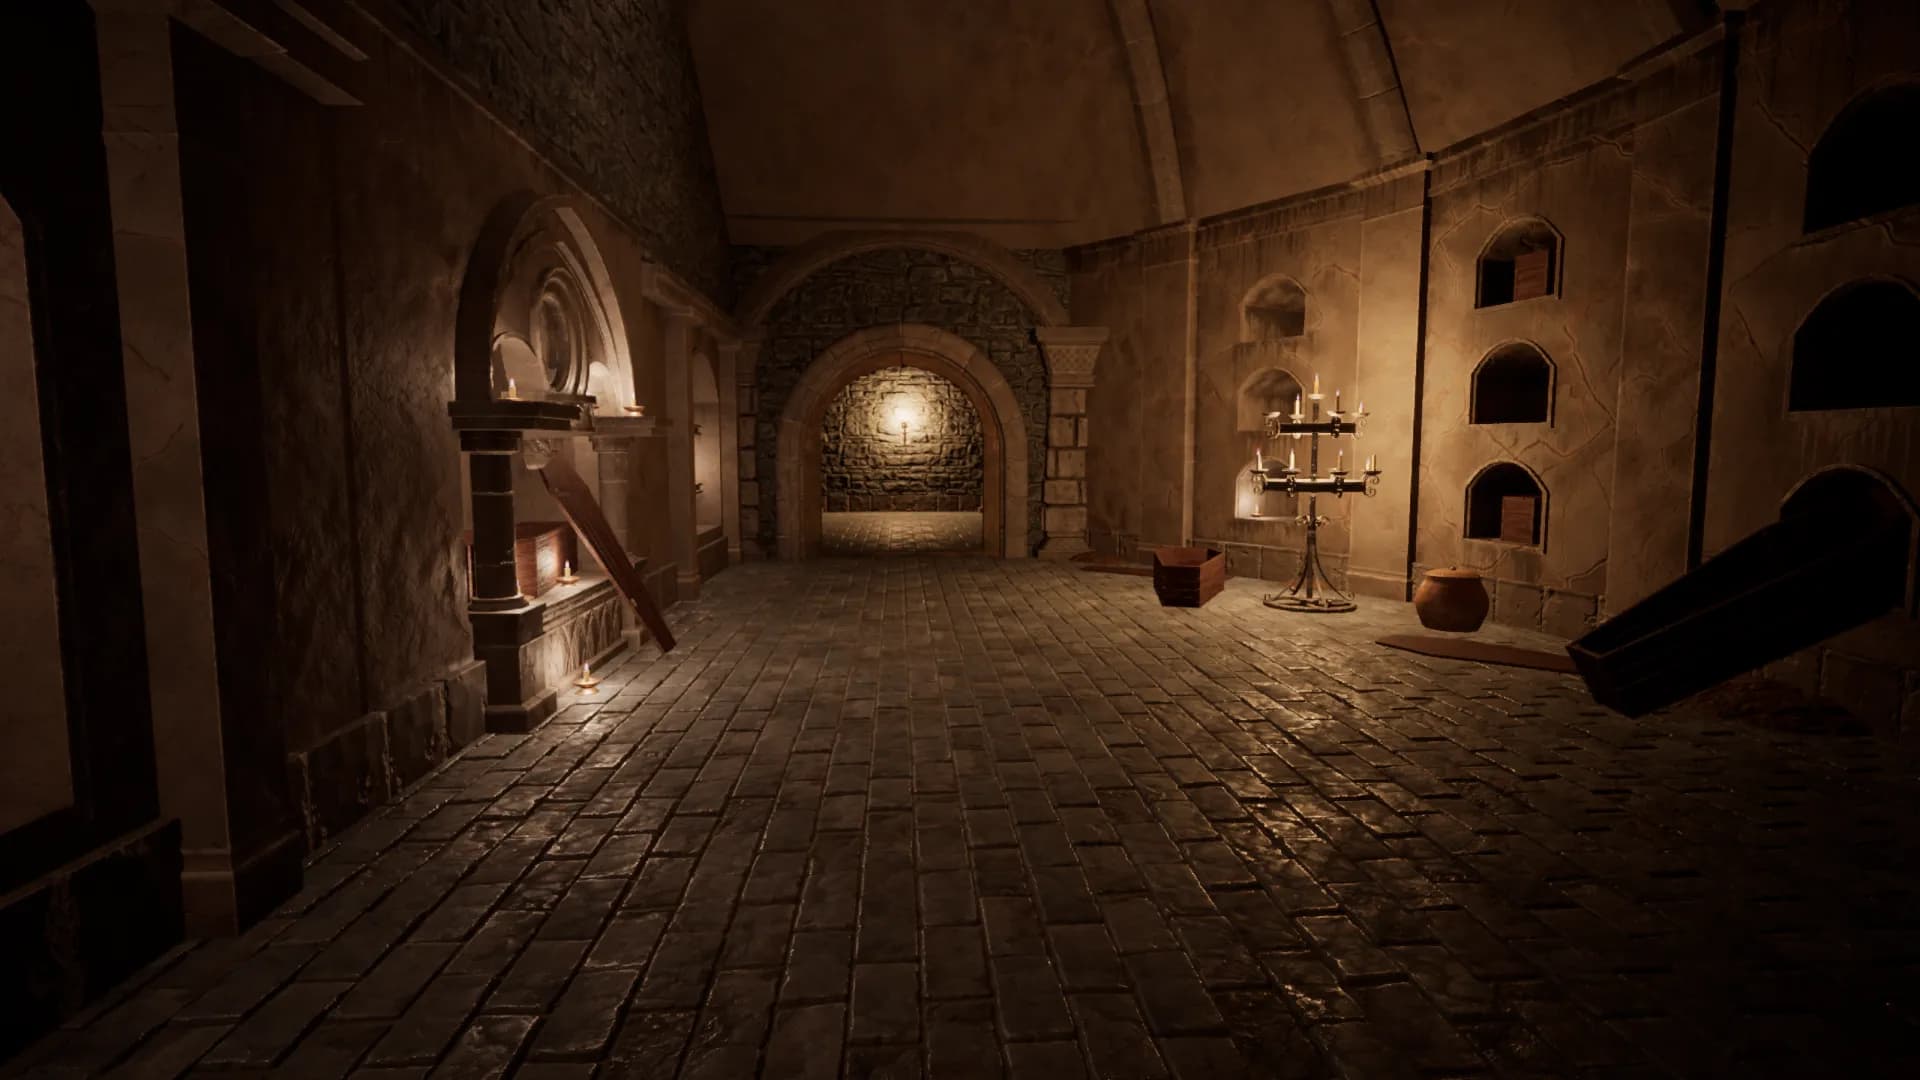 Screenshot 4: Raided crypt